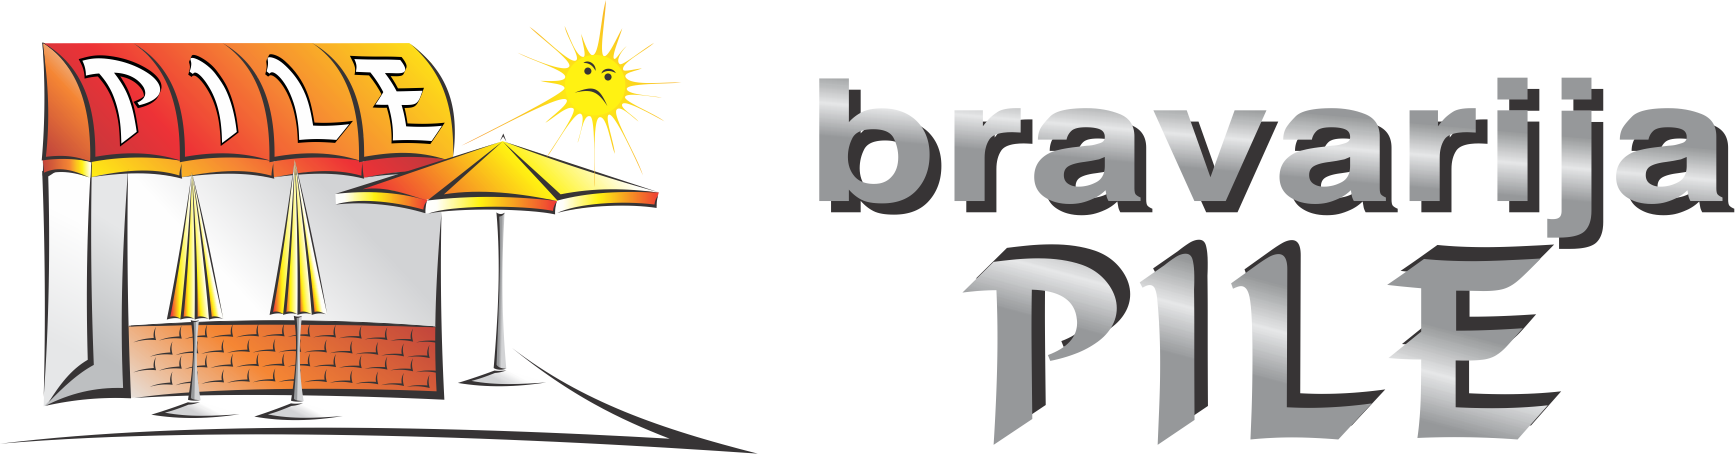 Bravarija Pile Logo